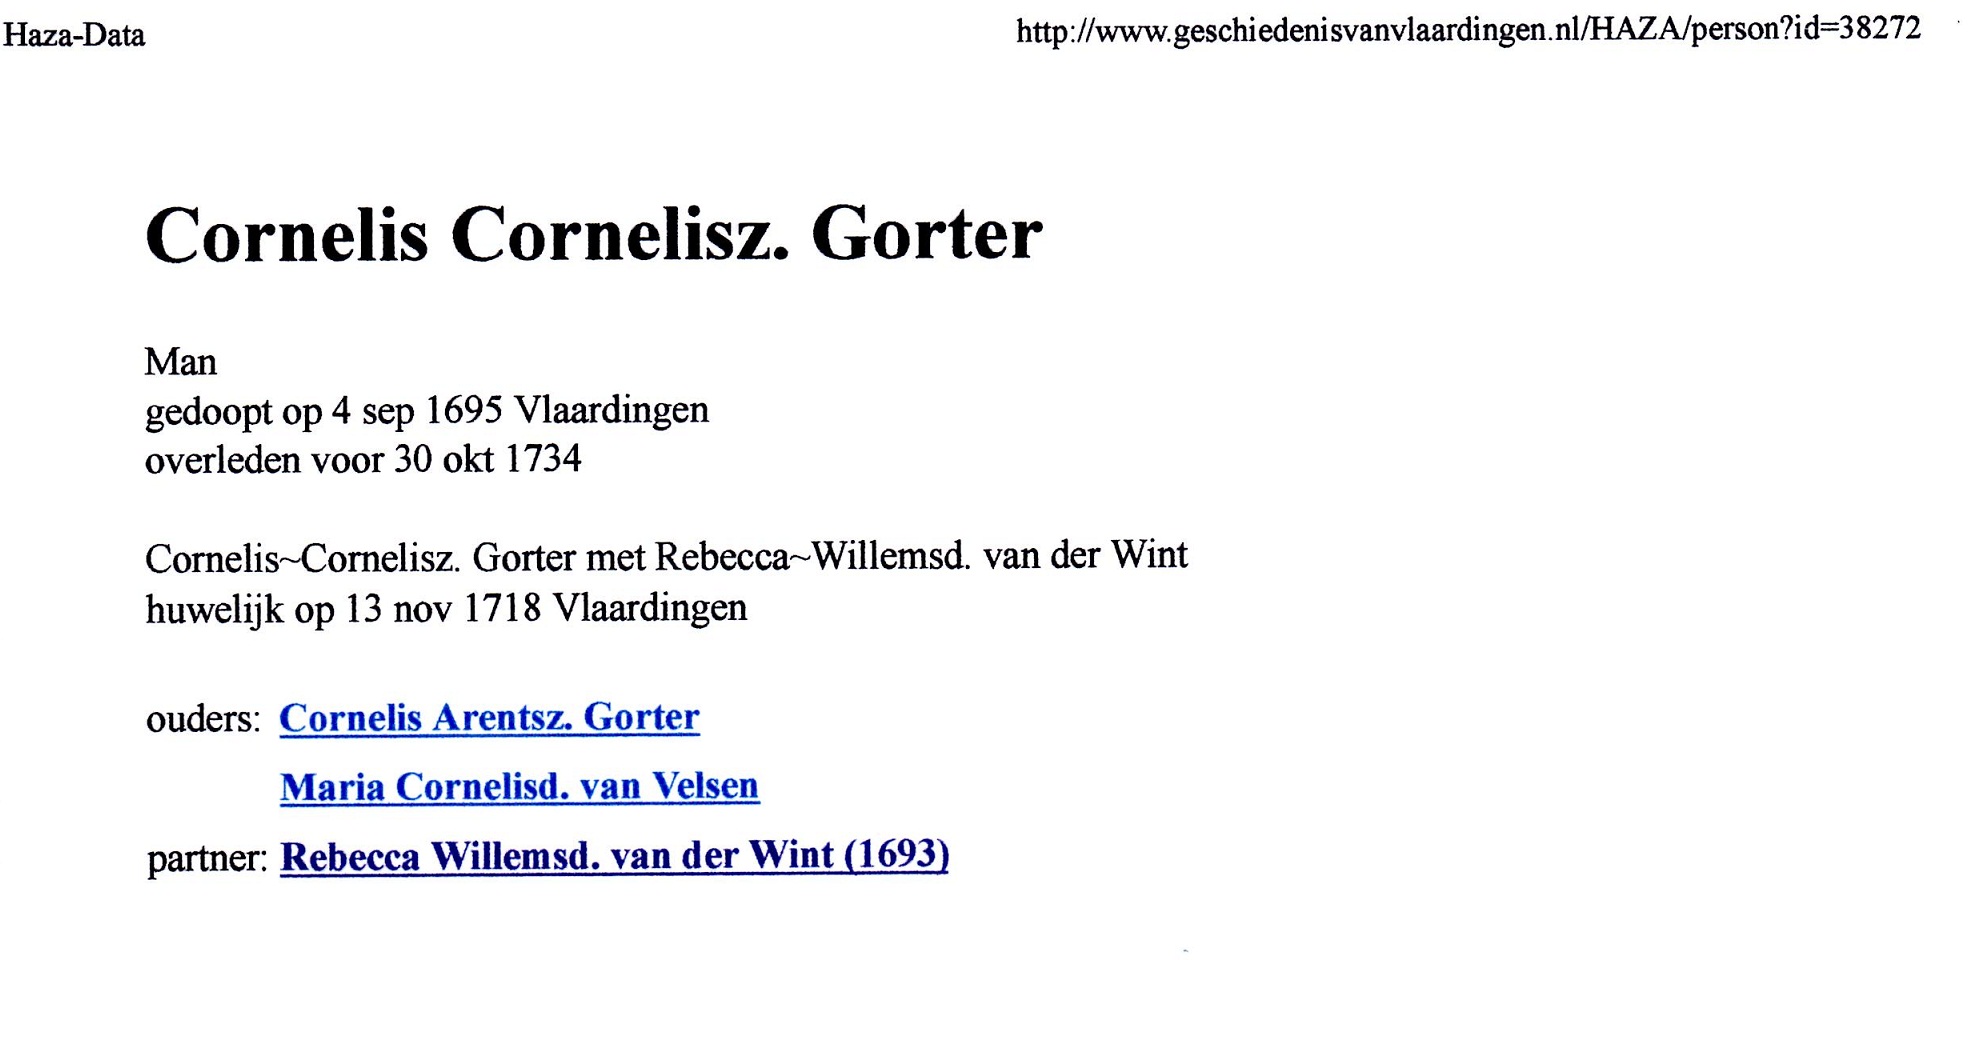 1695-09-04 Cornelis Cornelisz Gorter